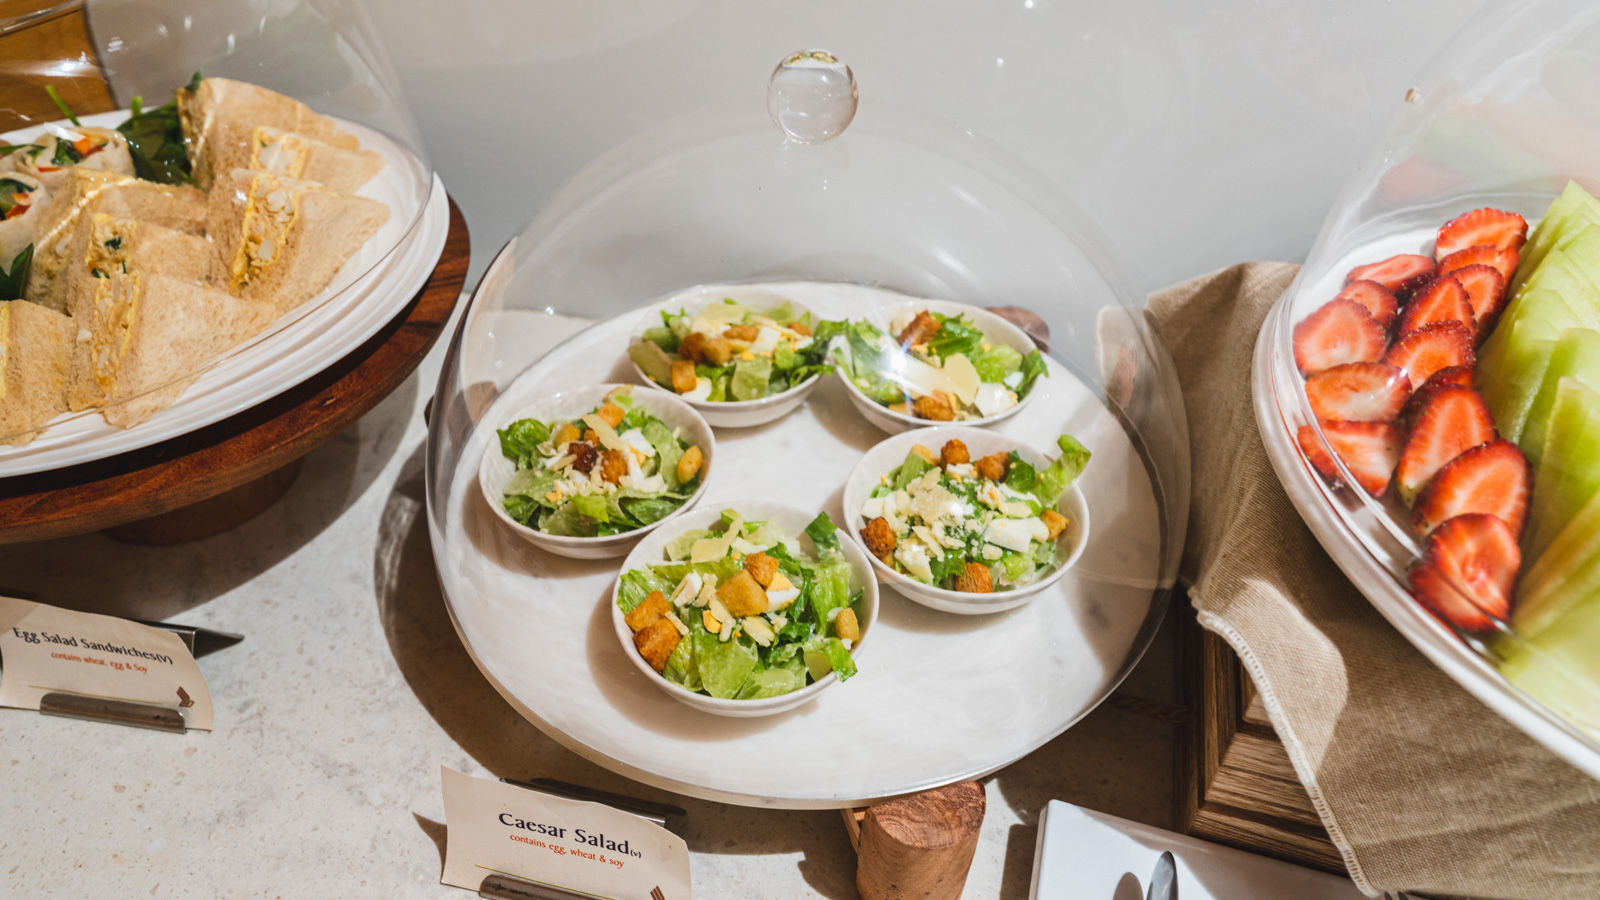 Singapore Airlines SilverKris Lounge Perth salad